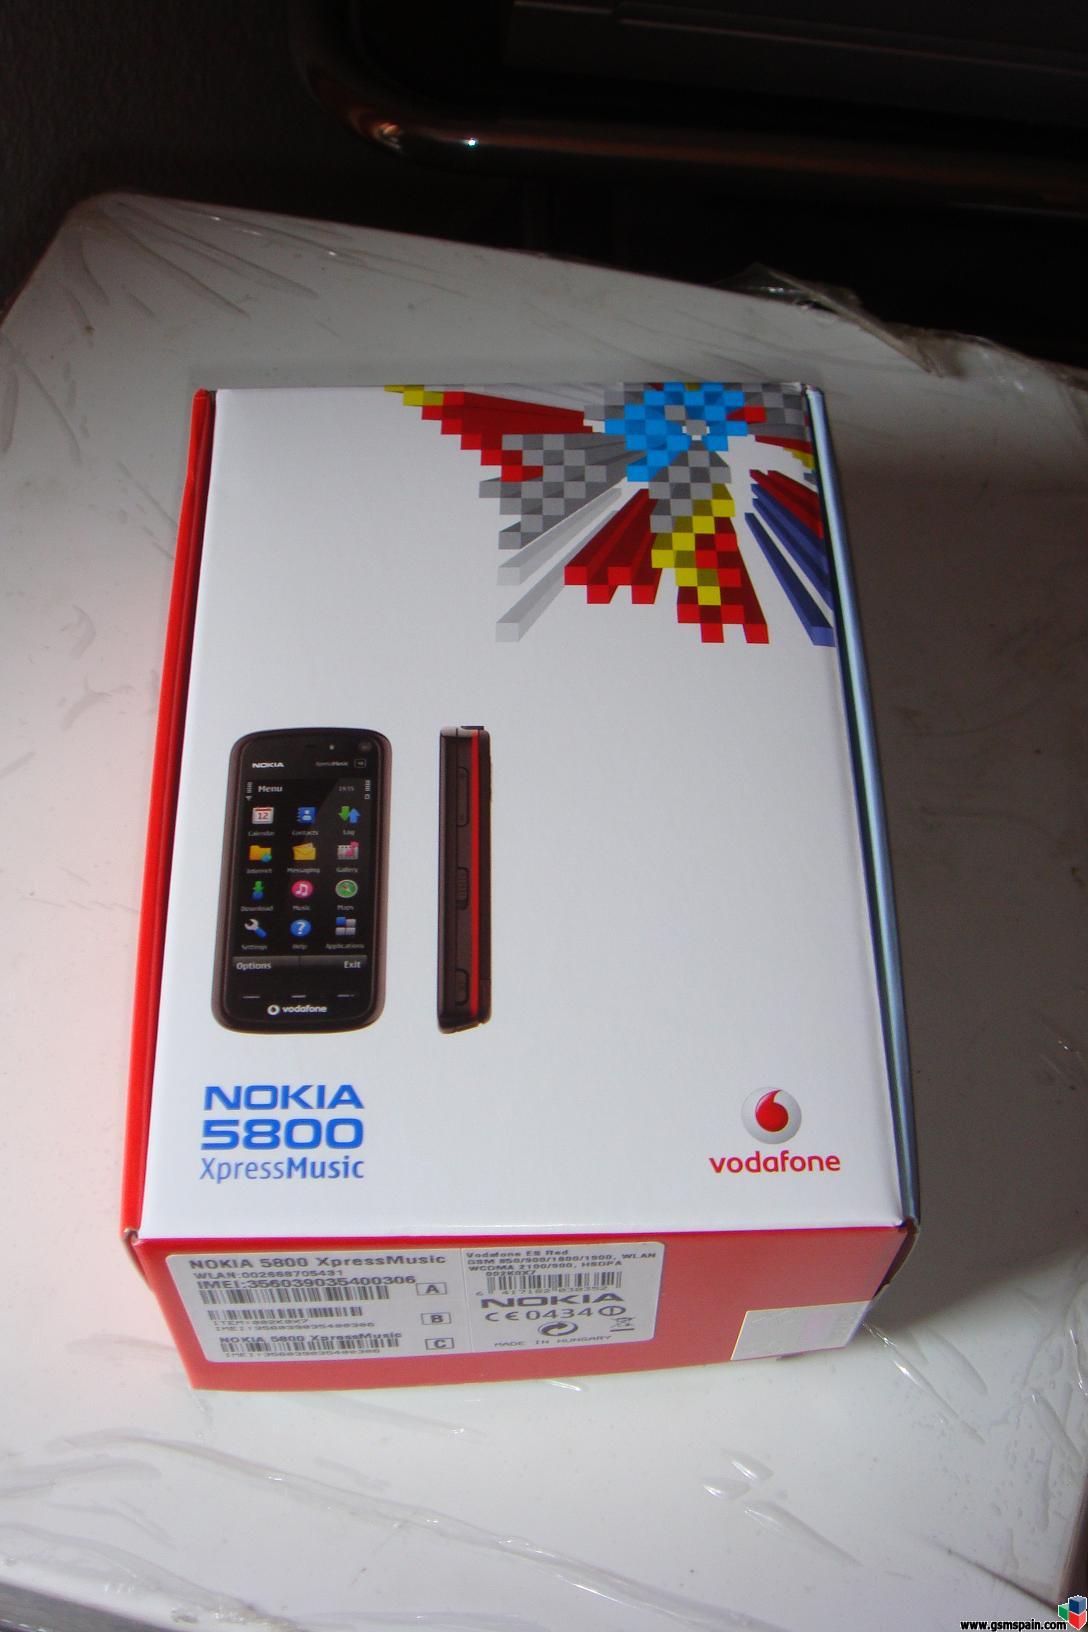 Nokia 5800 precintado, a estrenar. Vodafone